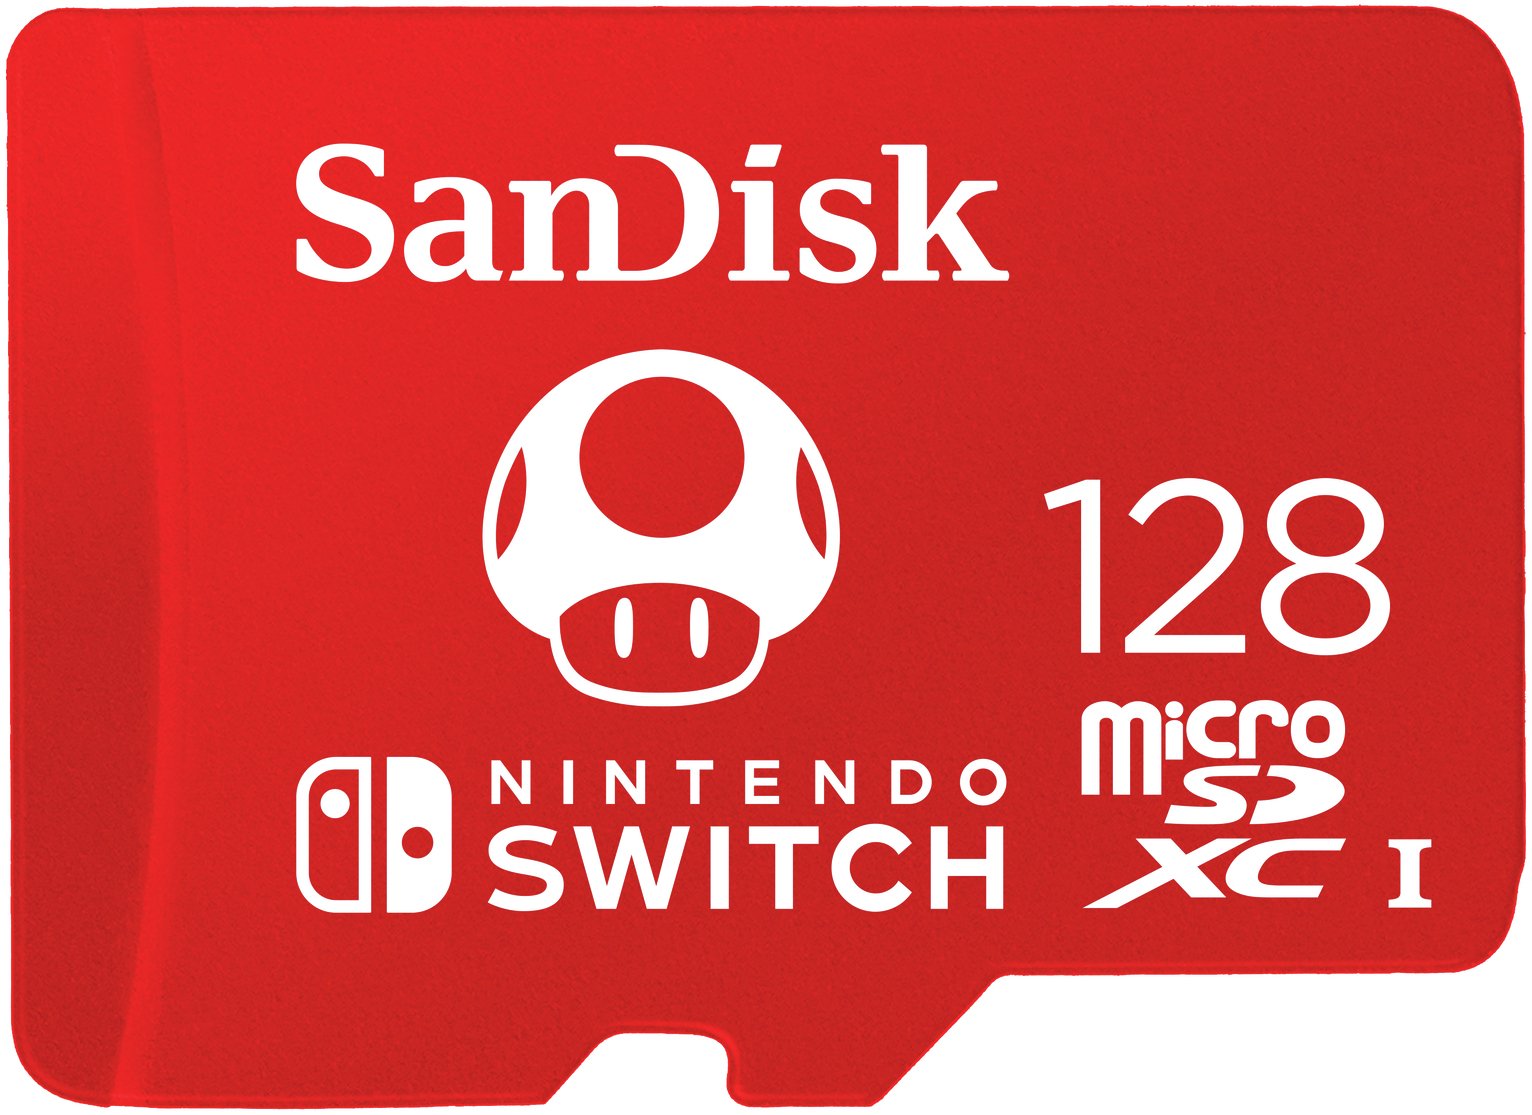 Nintendo Switch & Nintendo Lite microSD Memory Card Review